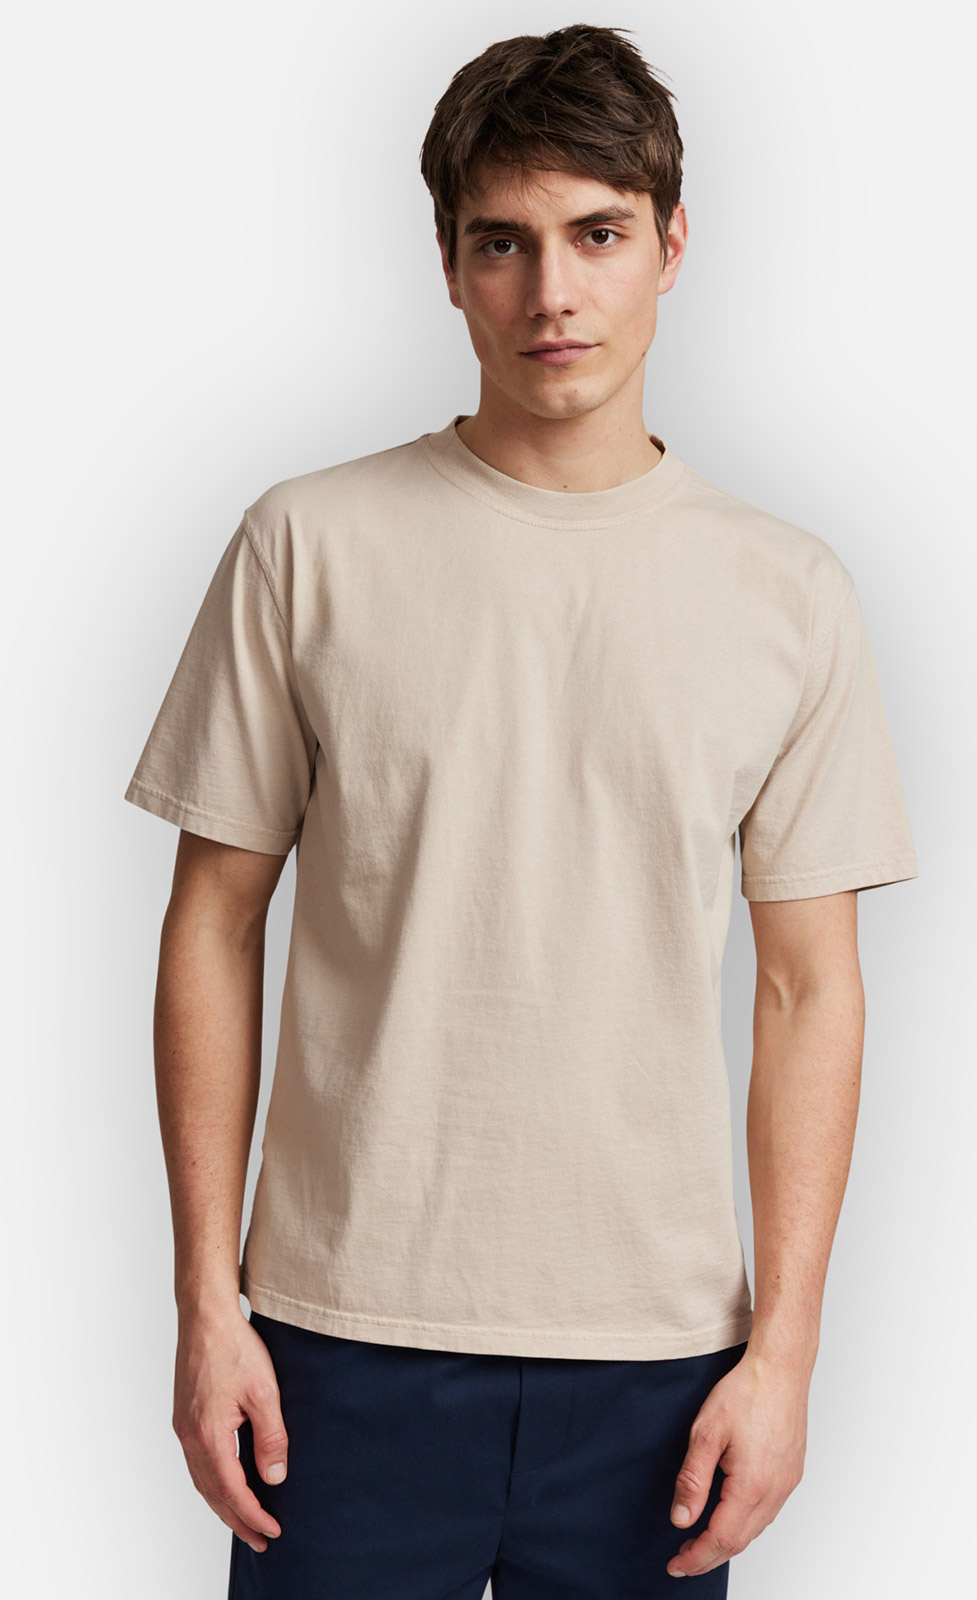 Bastian---Garment-Dye-T-Shirt-aus-Baumwolle